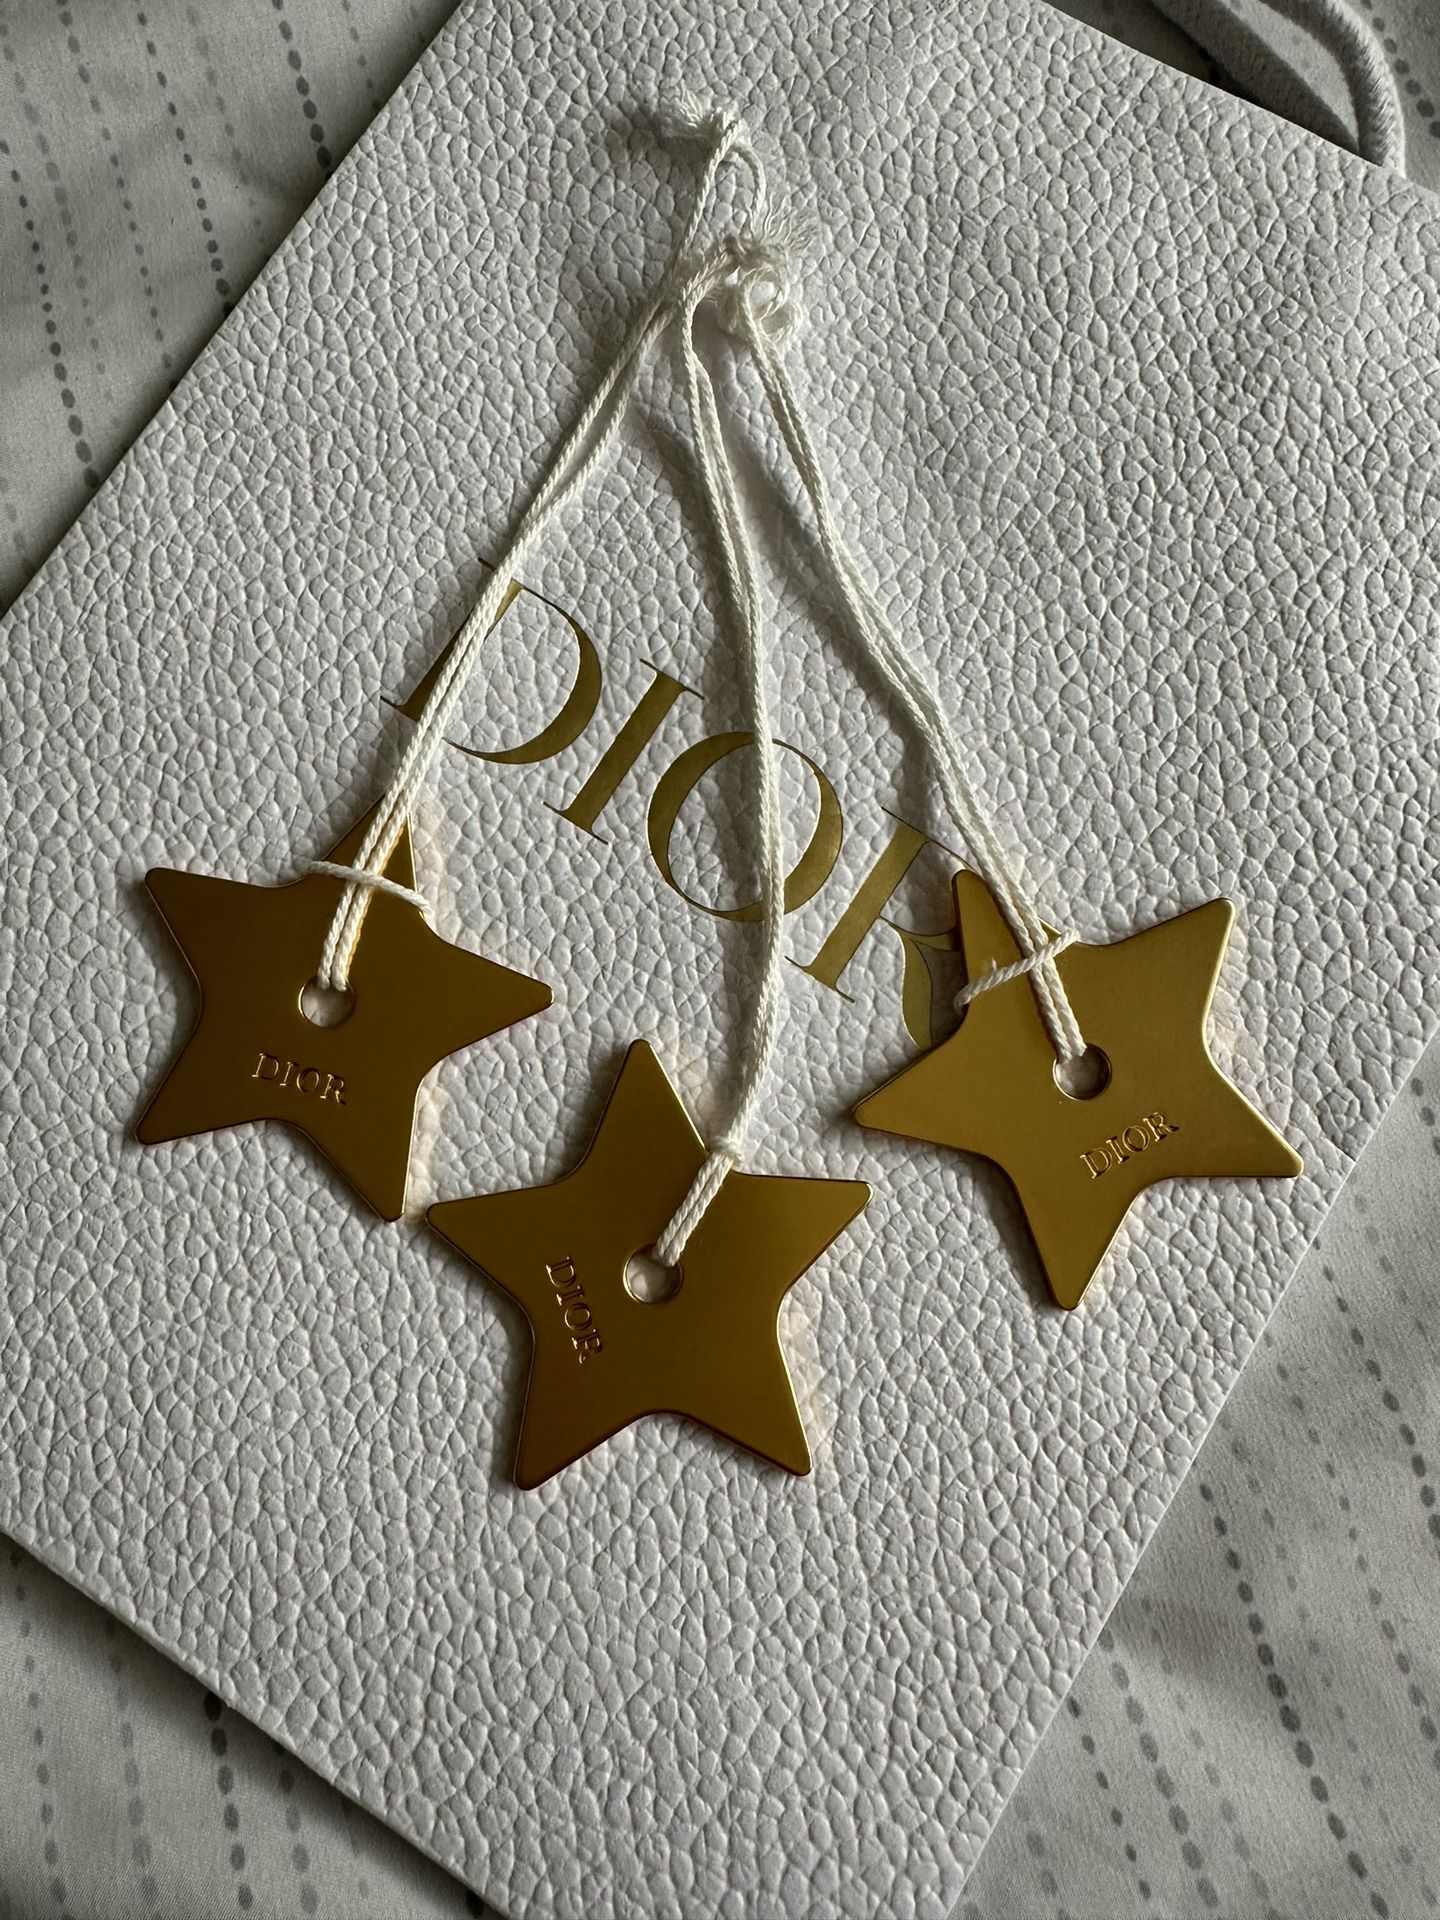 Dior Christian Dior star logo bag charm pendant key chain